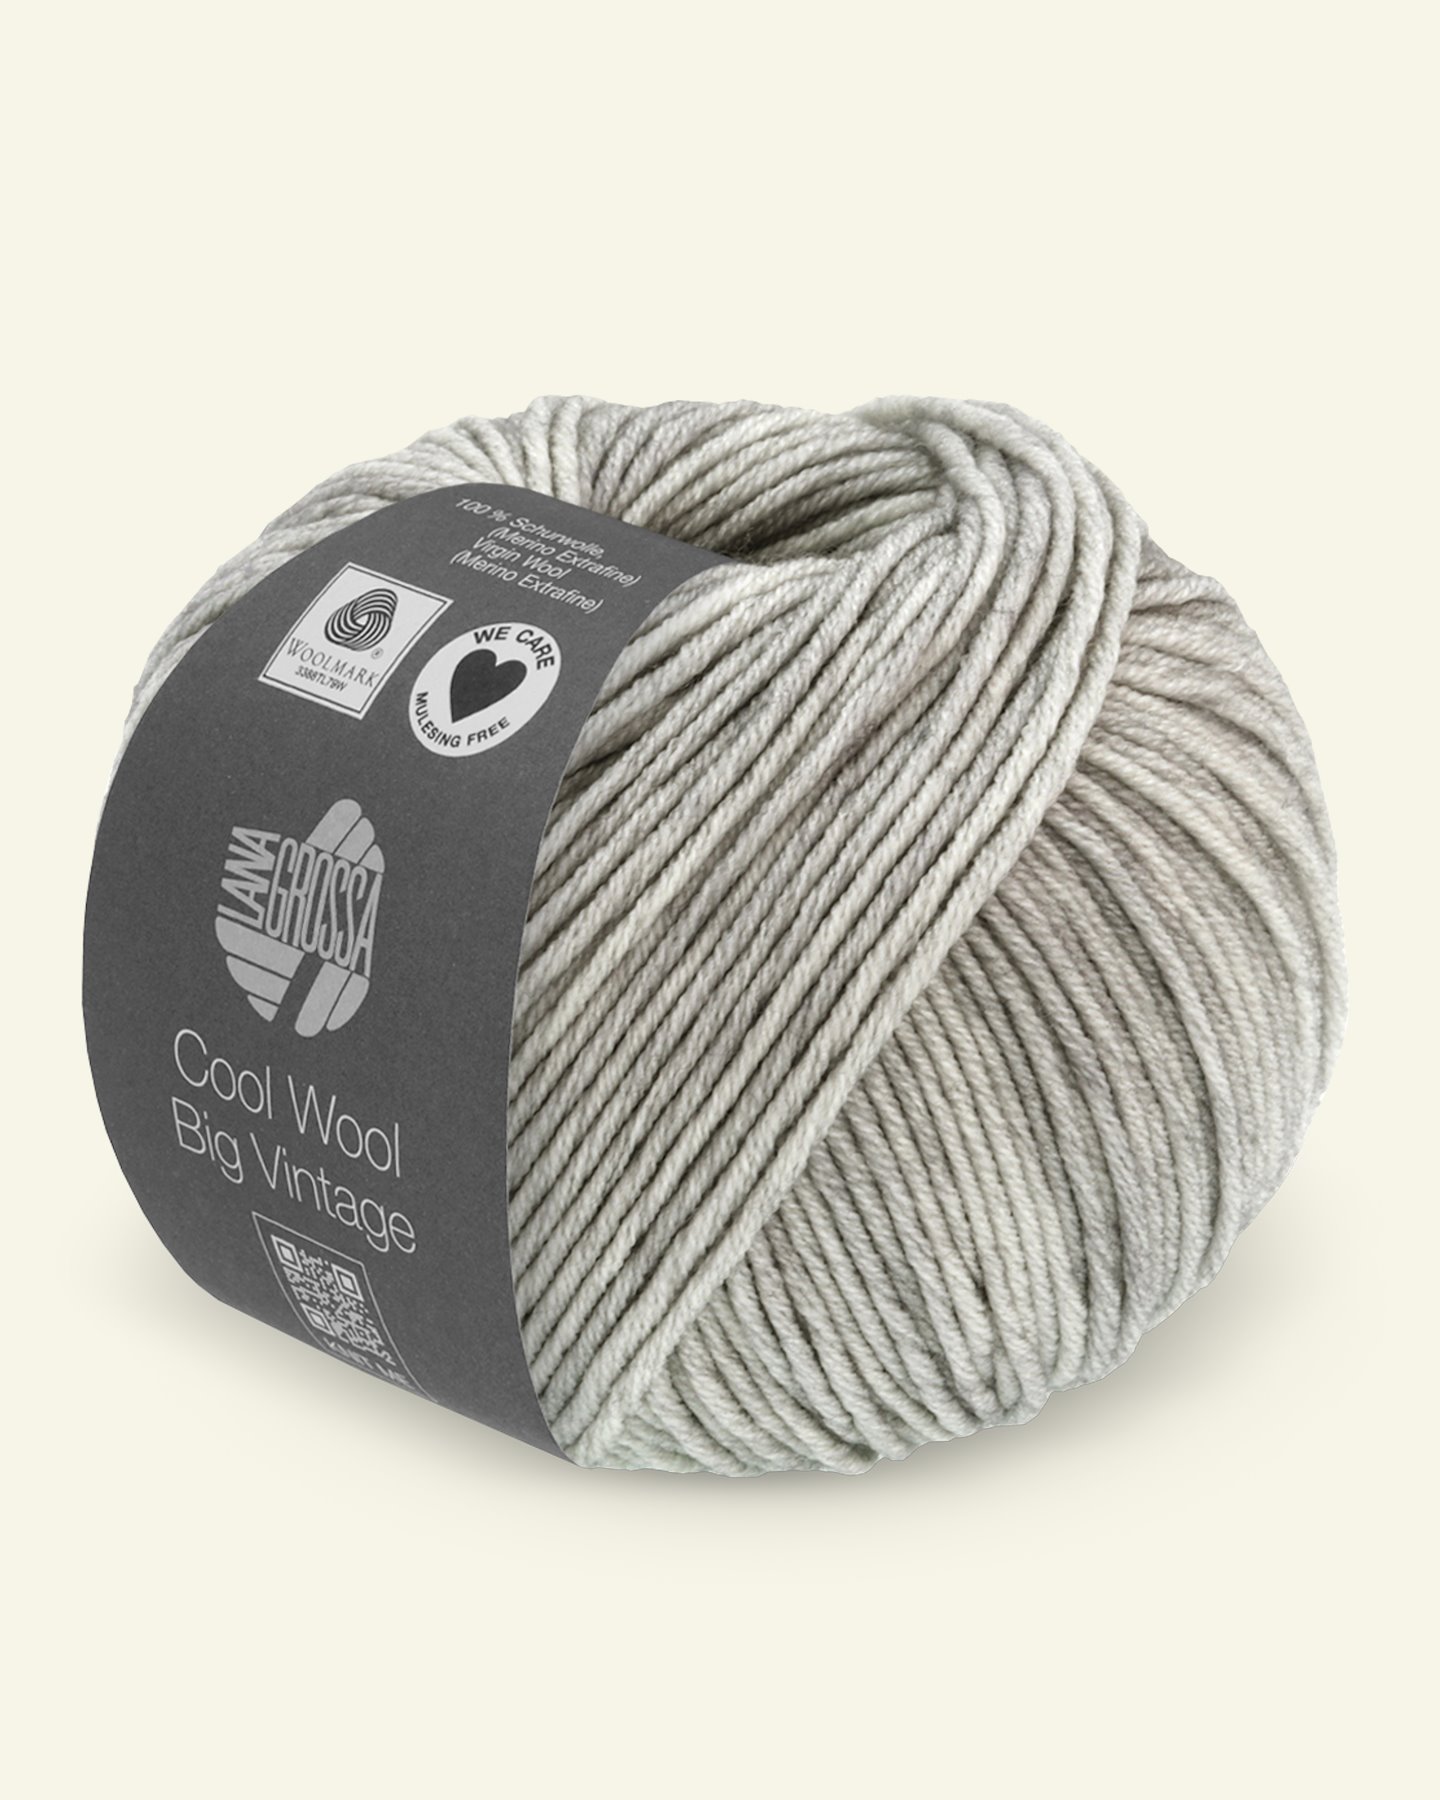 Lana Grossa, extrafine merino wool yarn "Cool Wool Big Vintage", lt grey 90001073_pack